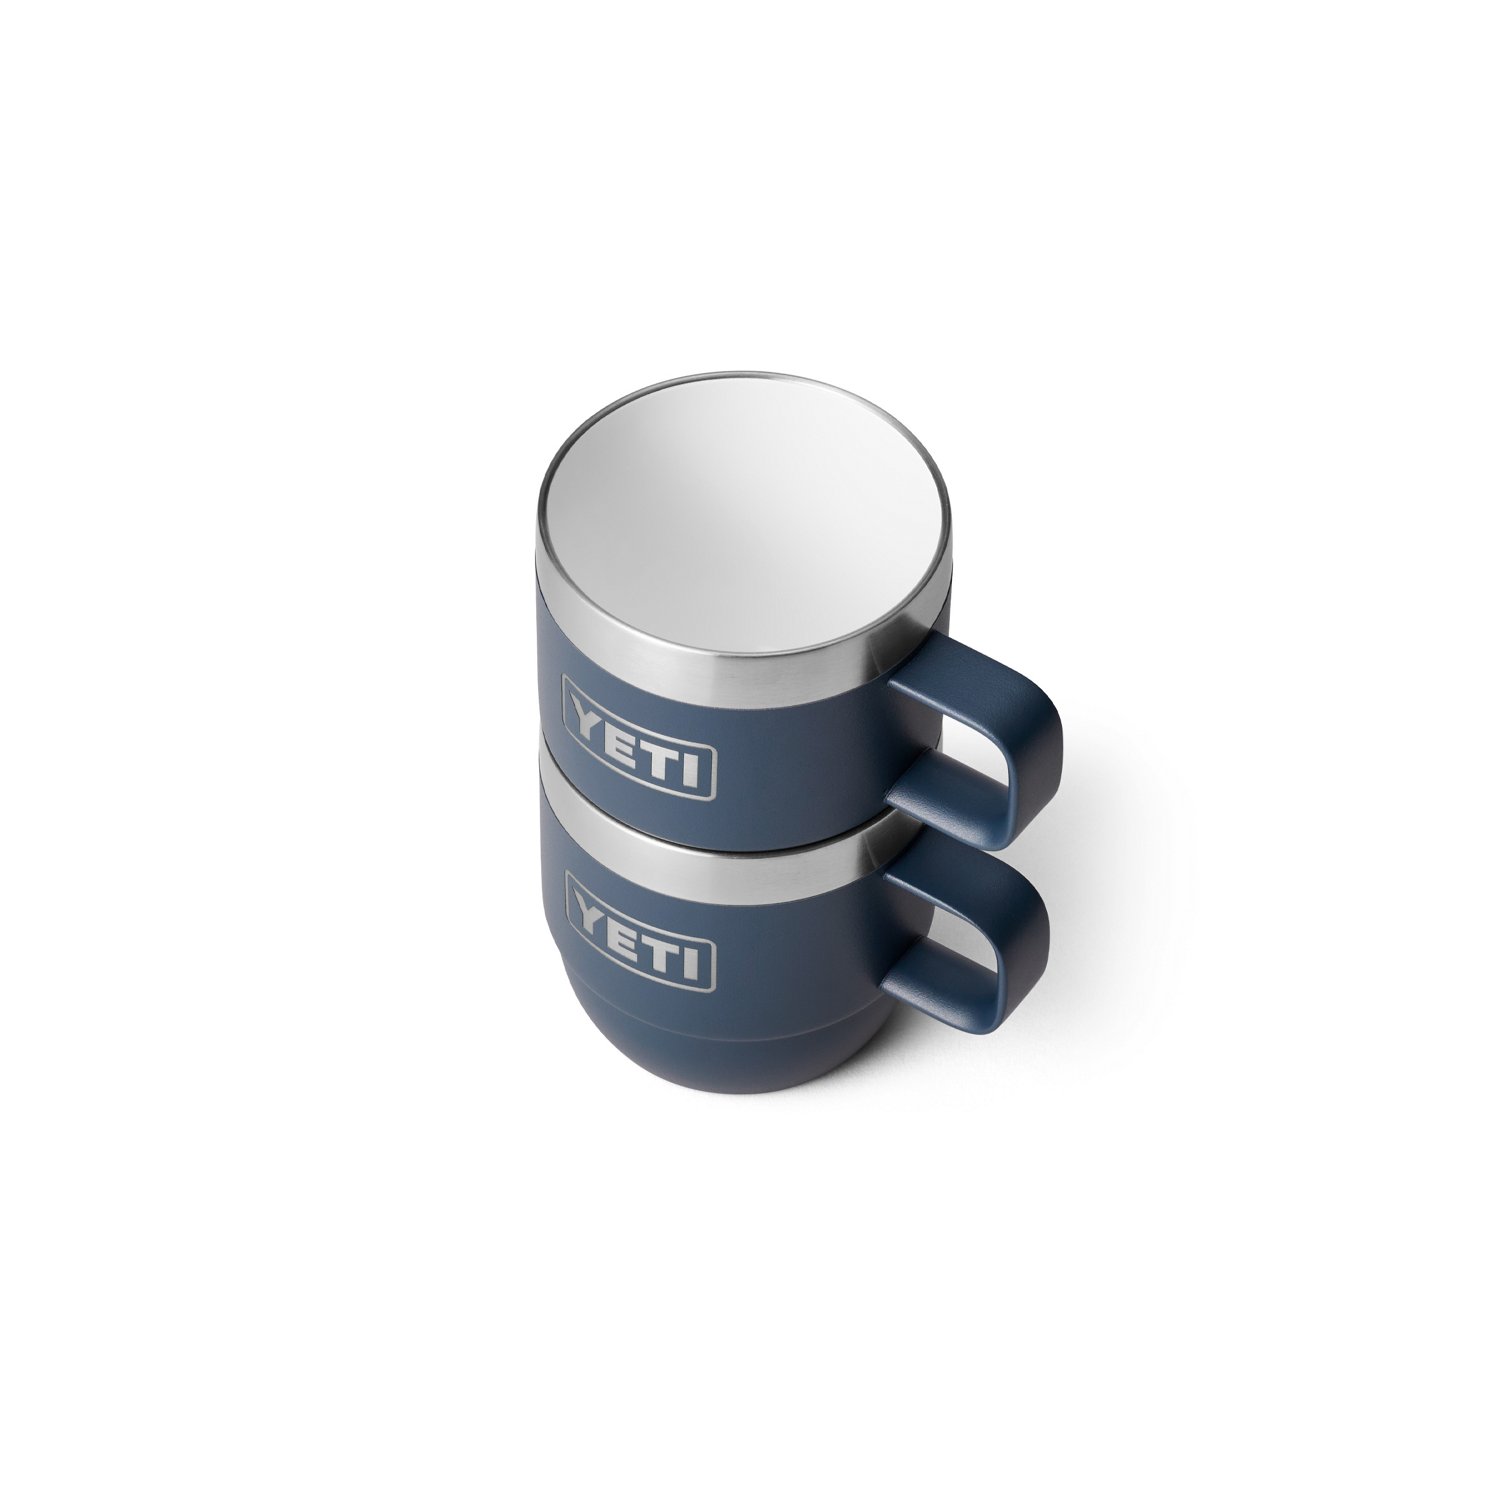 YETI® Black Rambler 6oz Espresso Mug 2 Pack